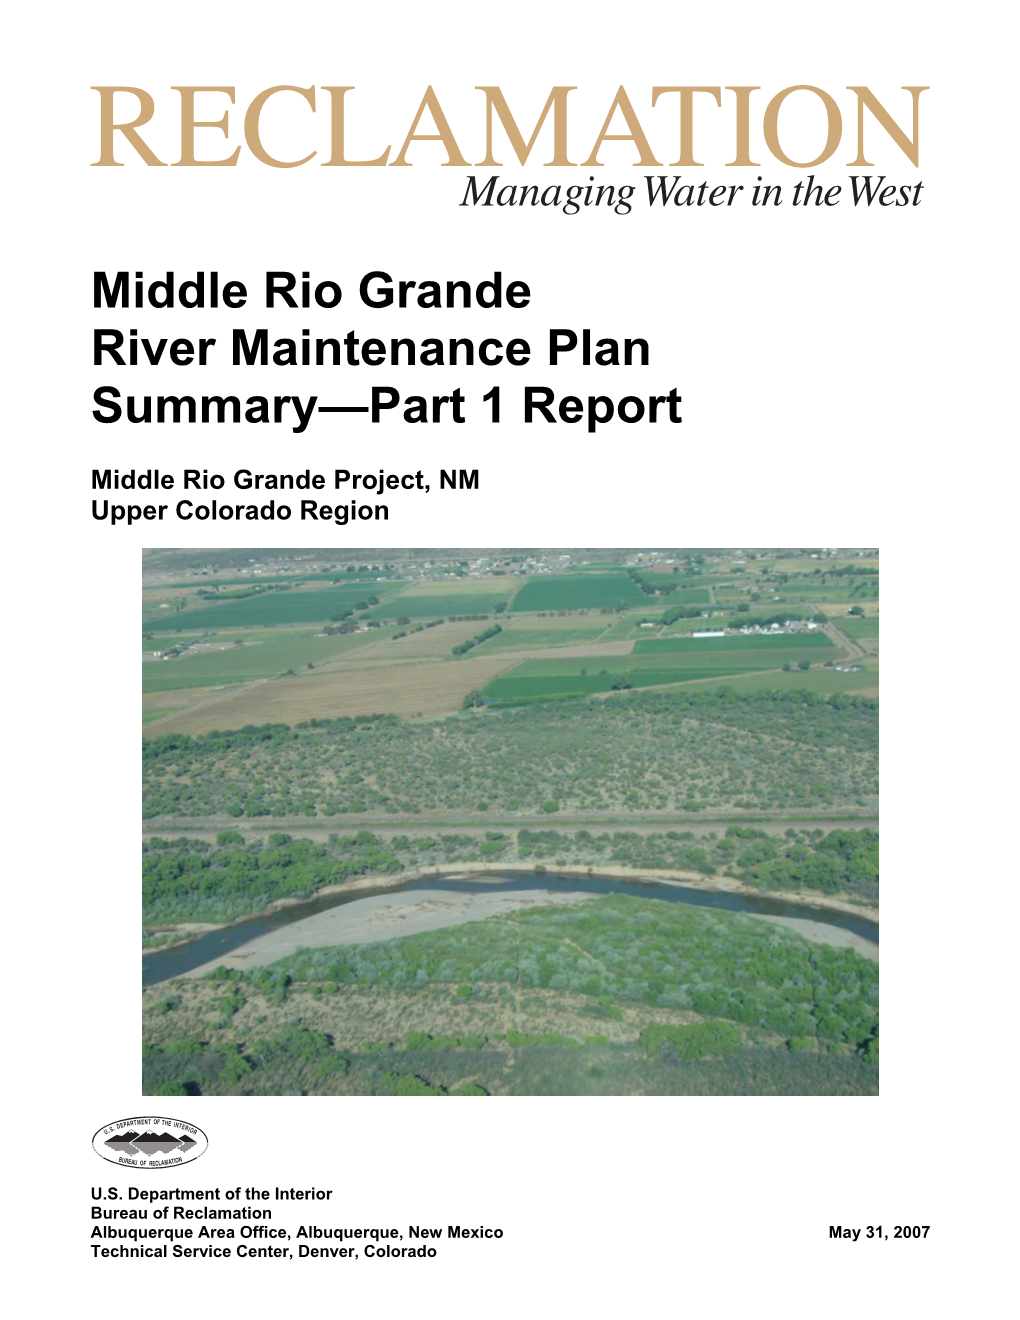 Middle Rio Grande River Maintenance Plan Summary—Part 1 Report